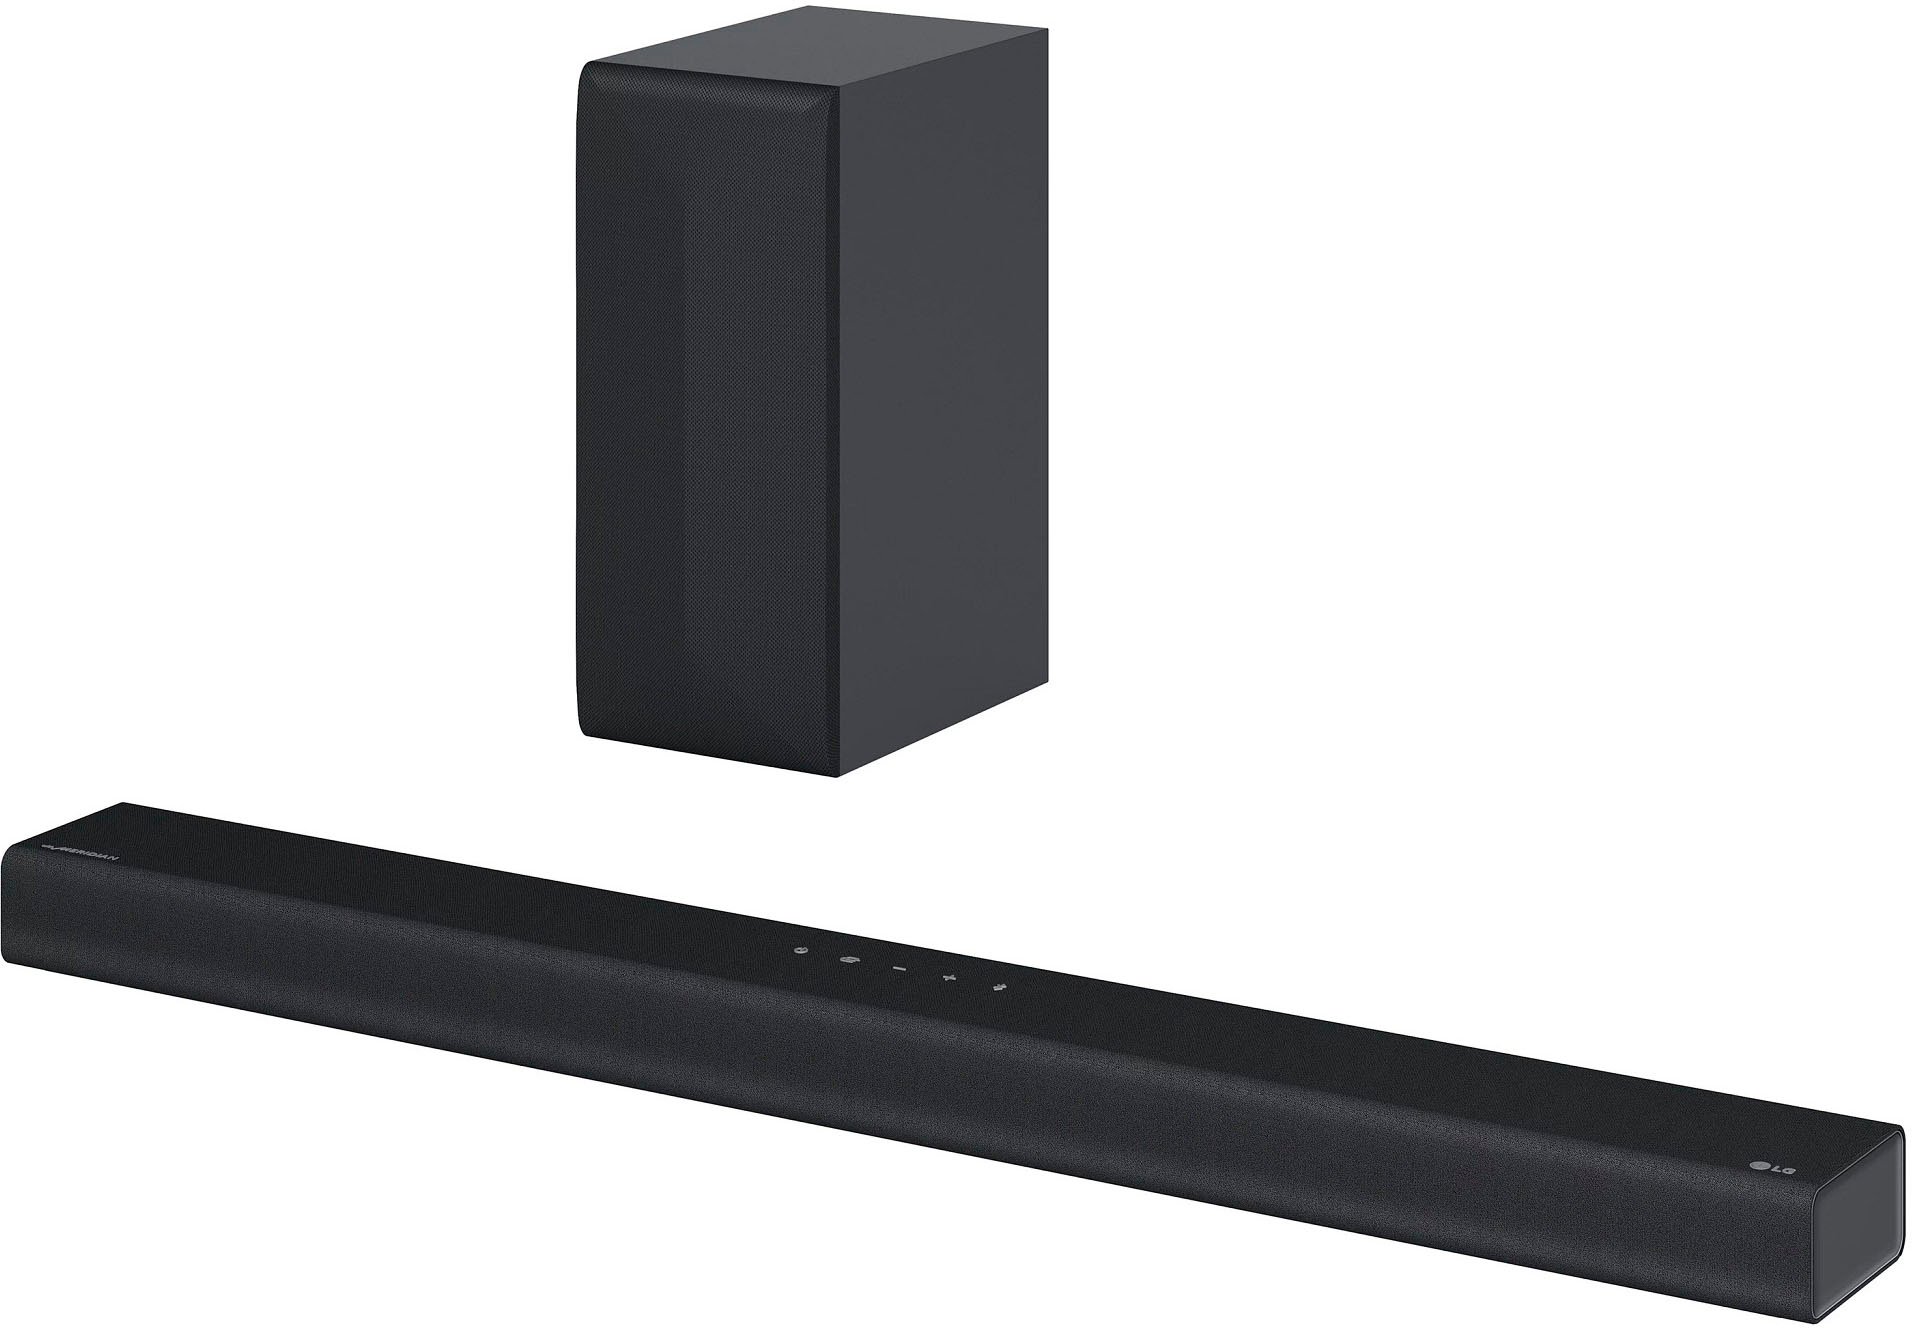 LG Sound Bar Options: Sound Bar Speakers - Best Buy